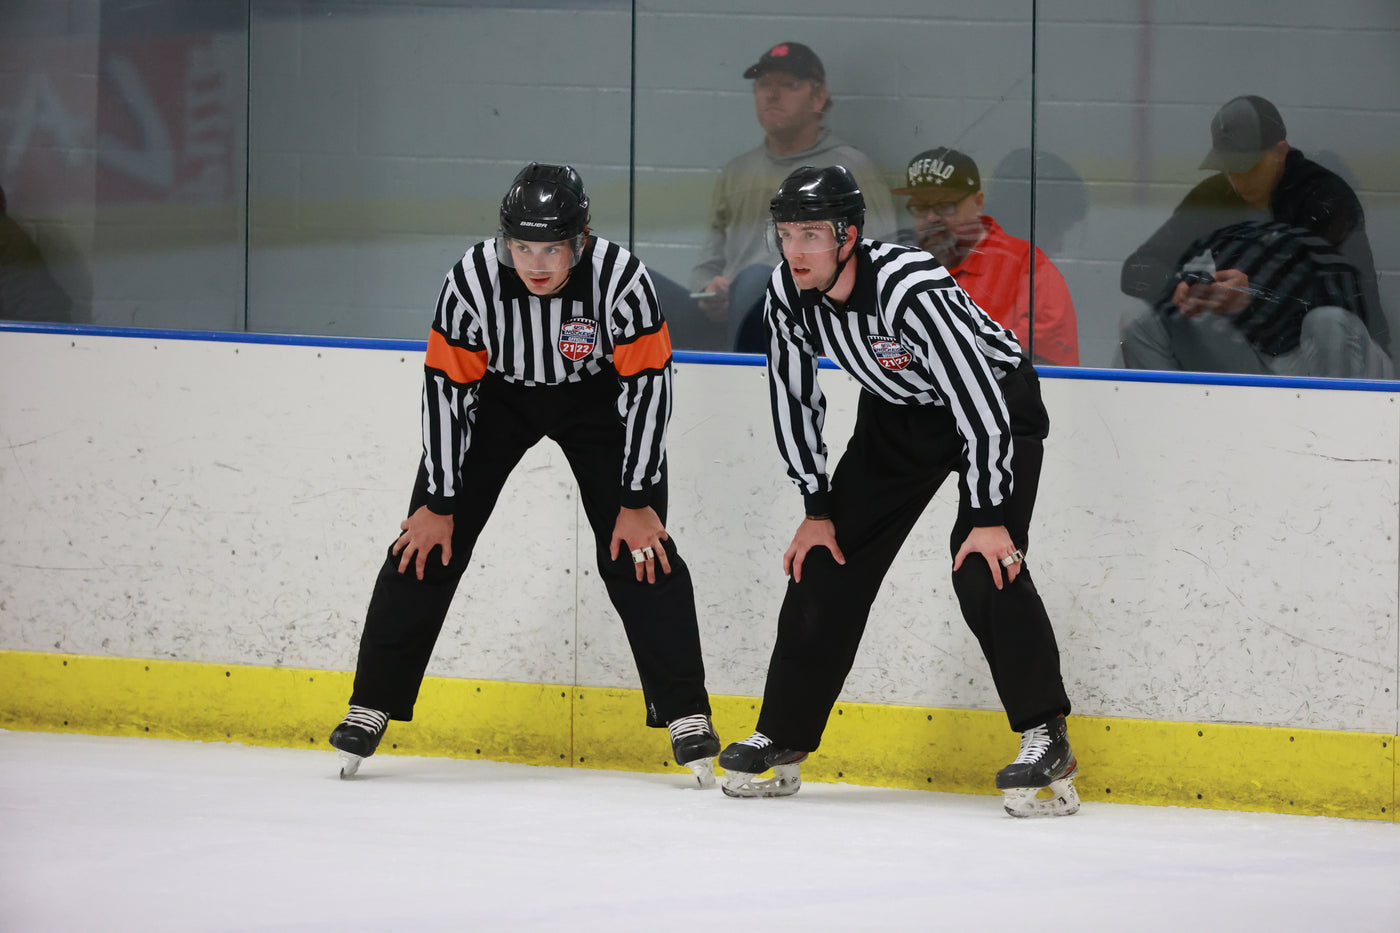 Hockey Ref Shop: Quality Ice Hockey Referee Equipment